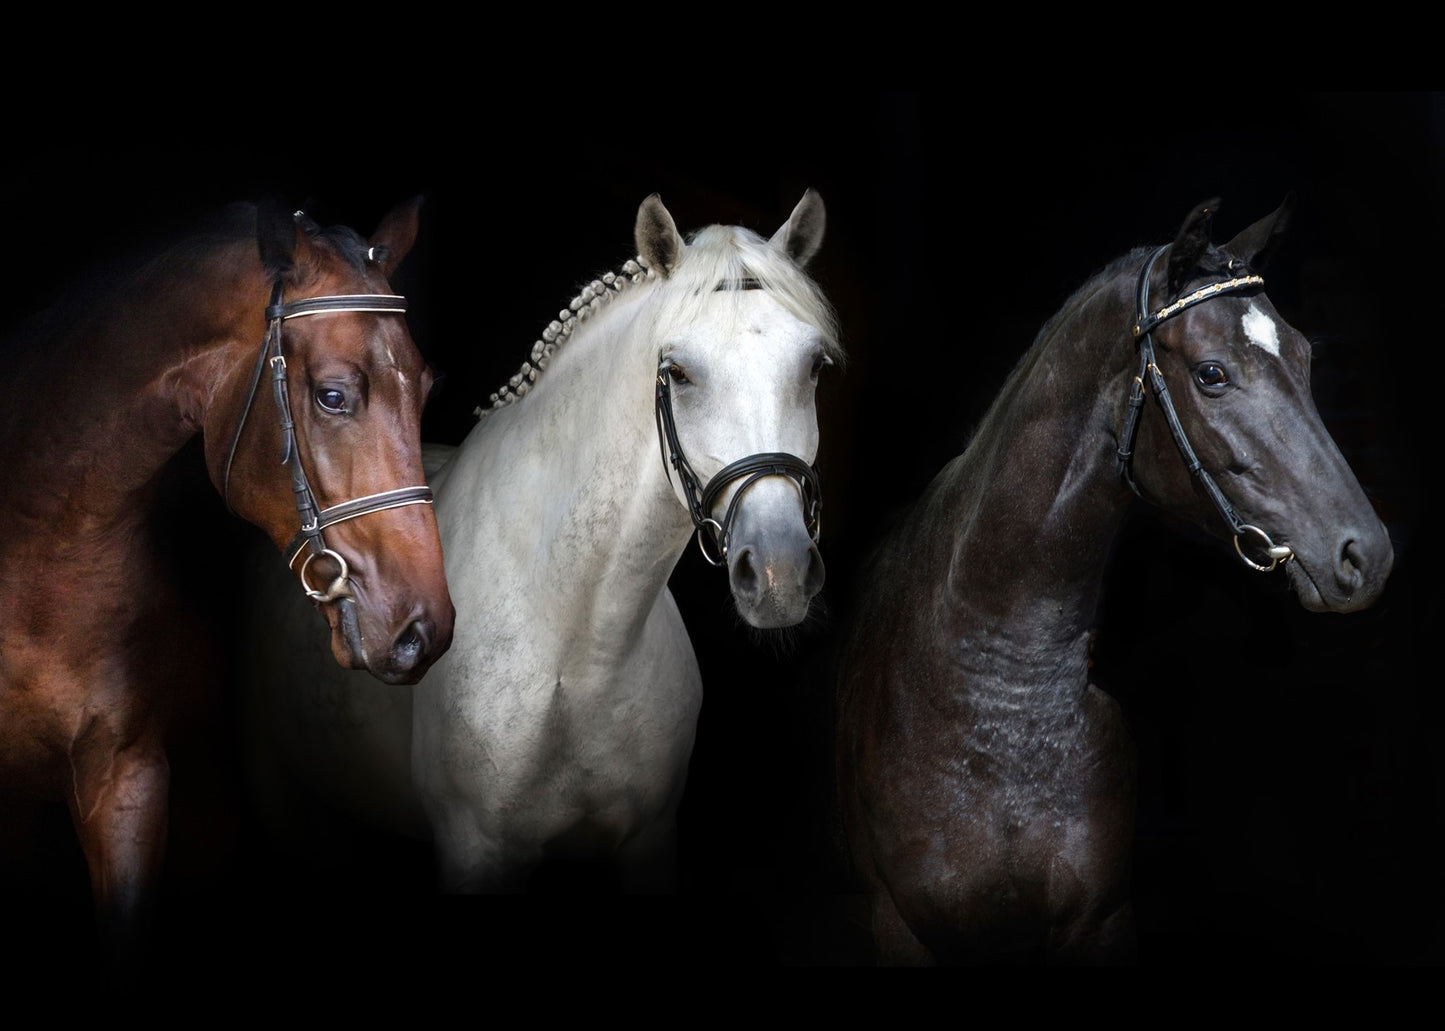 HORSES HEADS TRIO 3D LENTICULAR INTERNALLY FRAMED ART 14" X 18"